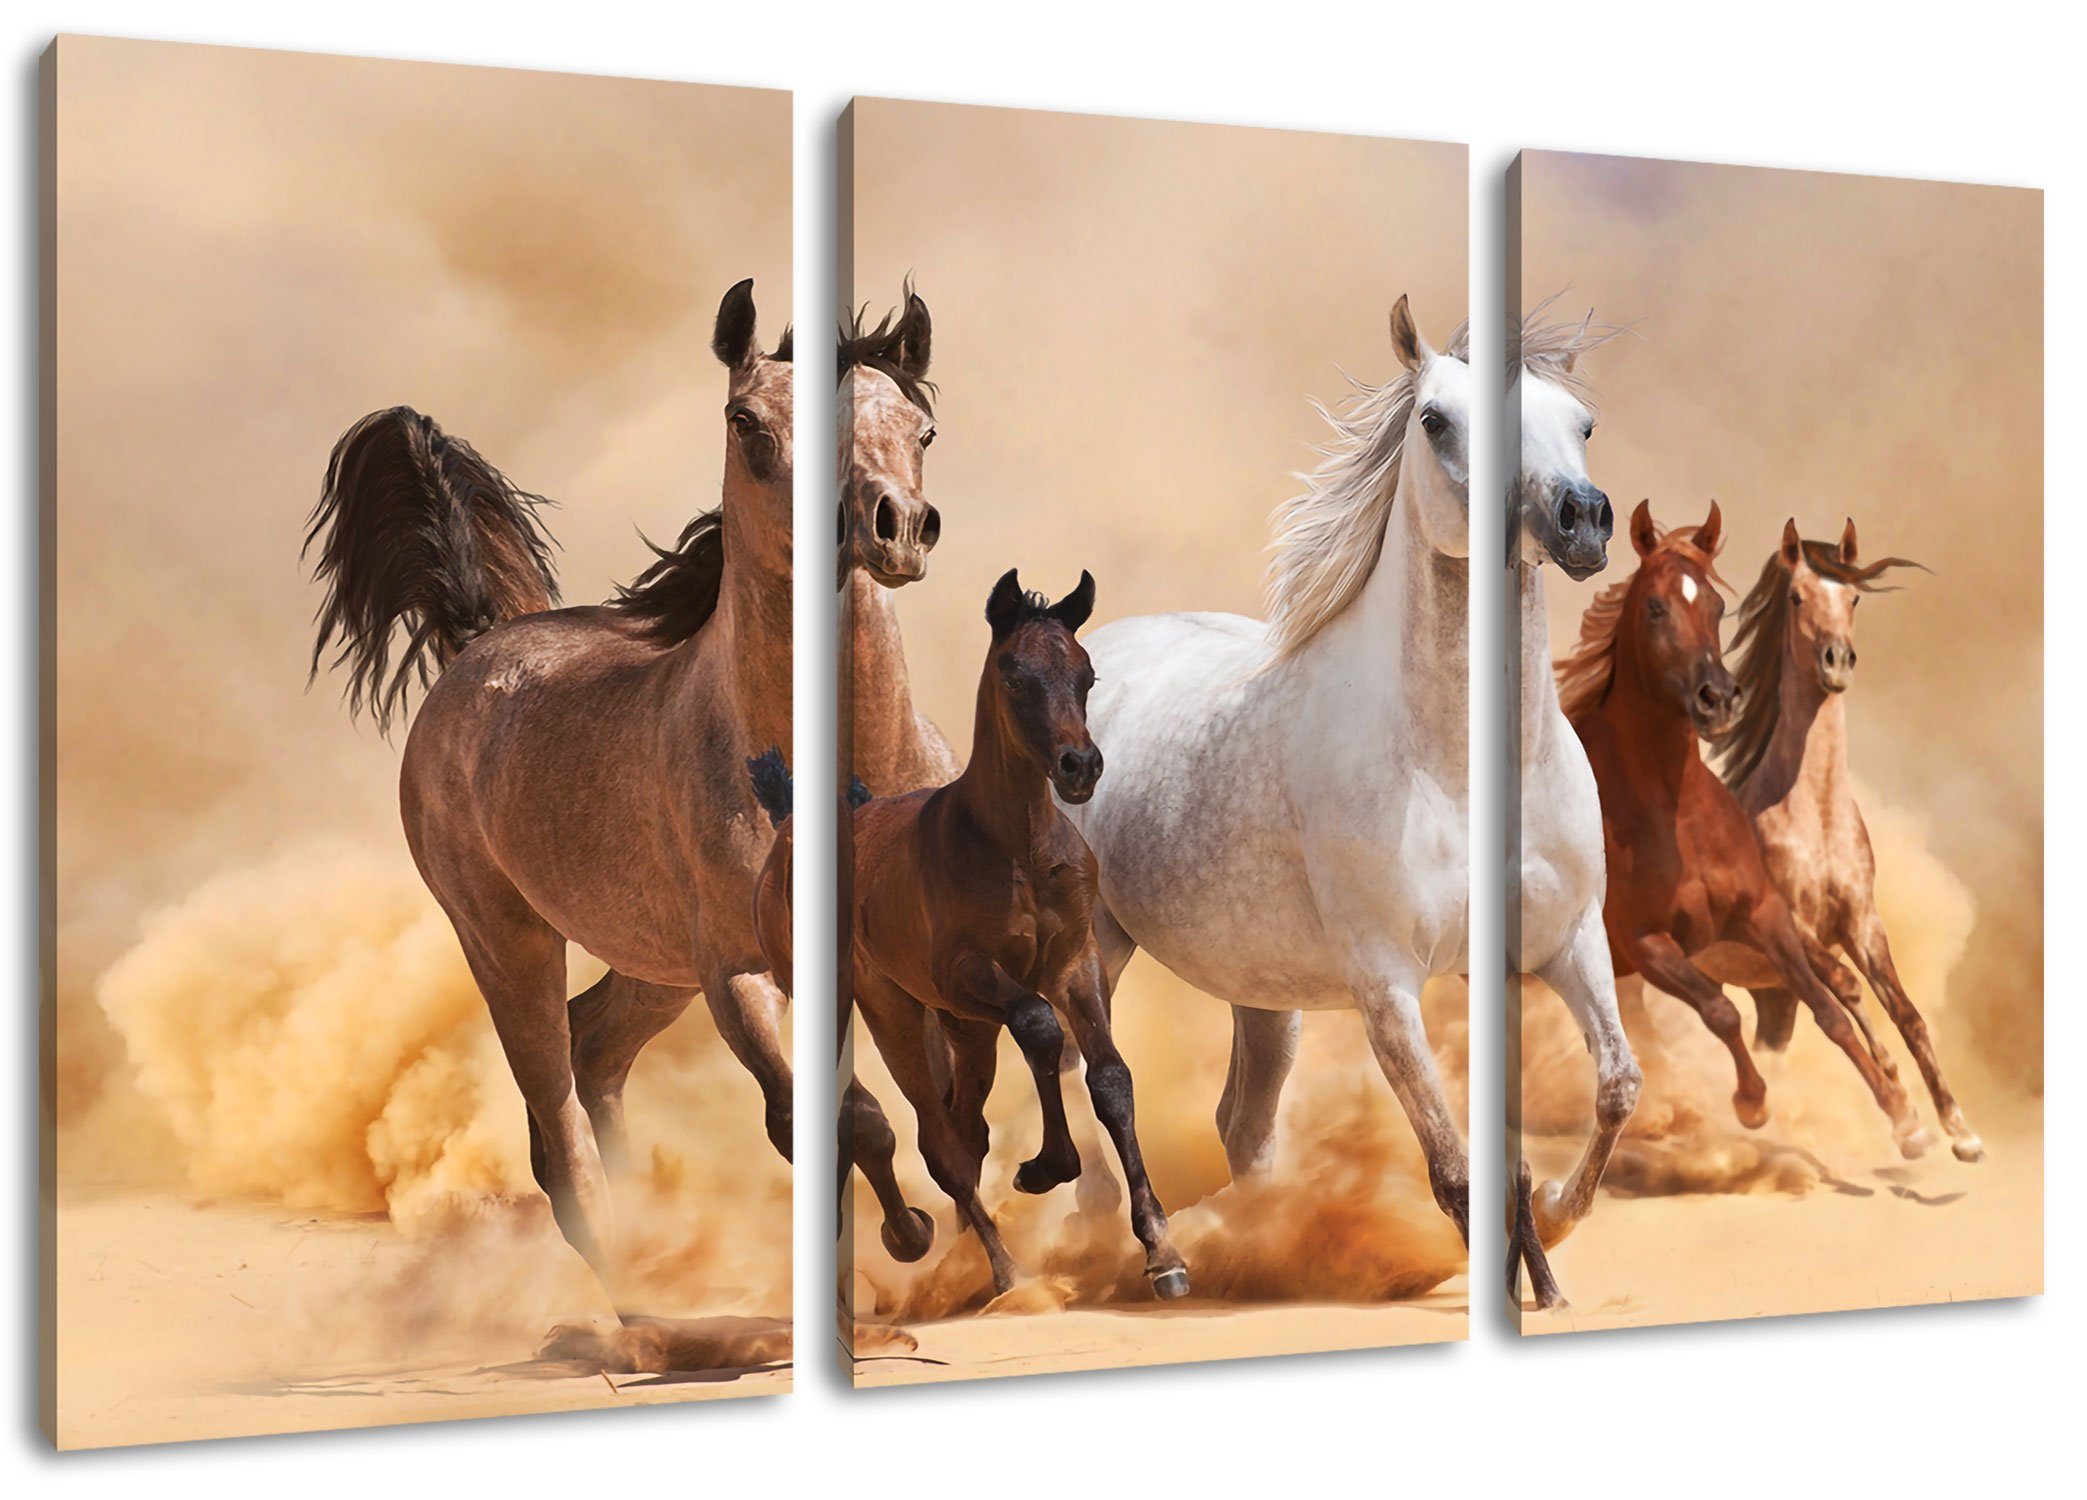 Pixxprint Leinwandbild Western Pferde mit Fohlen, Western Pferde mit Fohlen 3Teiler (120x80cm) (1 St), Leinwandbild fertig bespannt, inkl. Zackenaufhänger